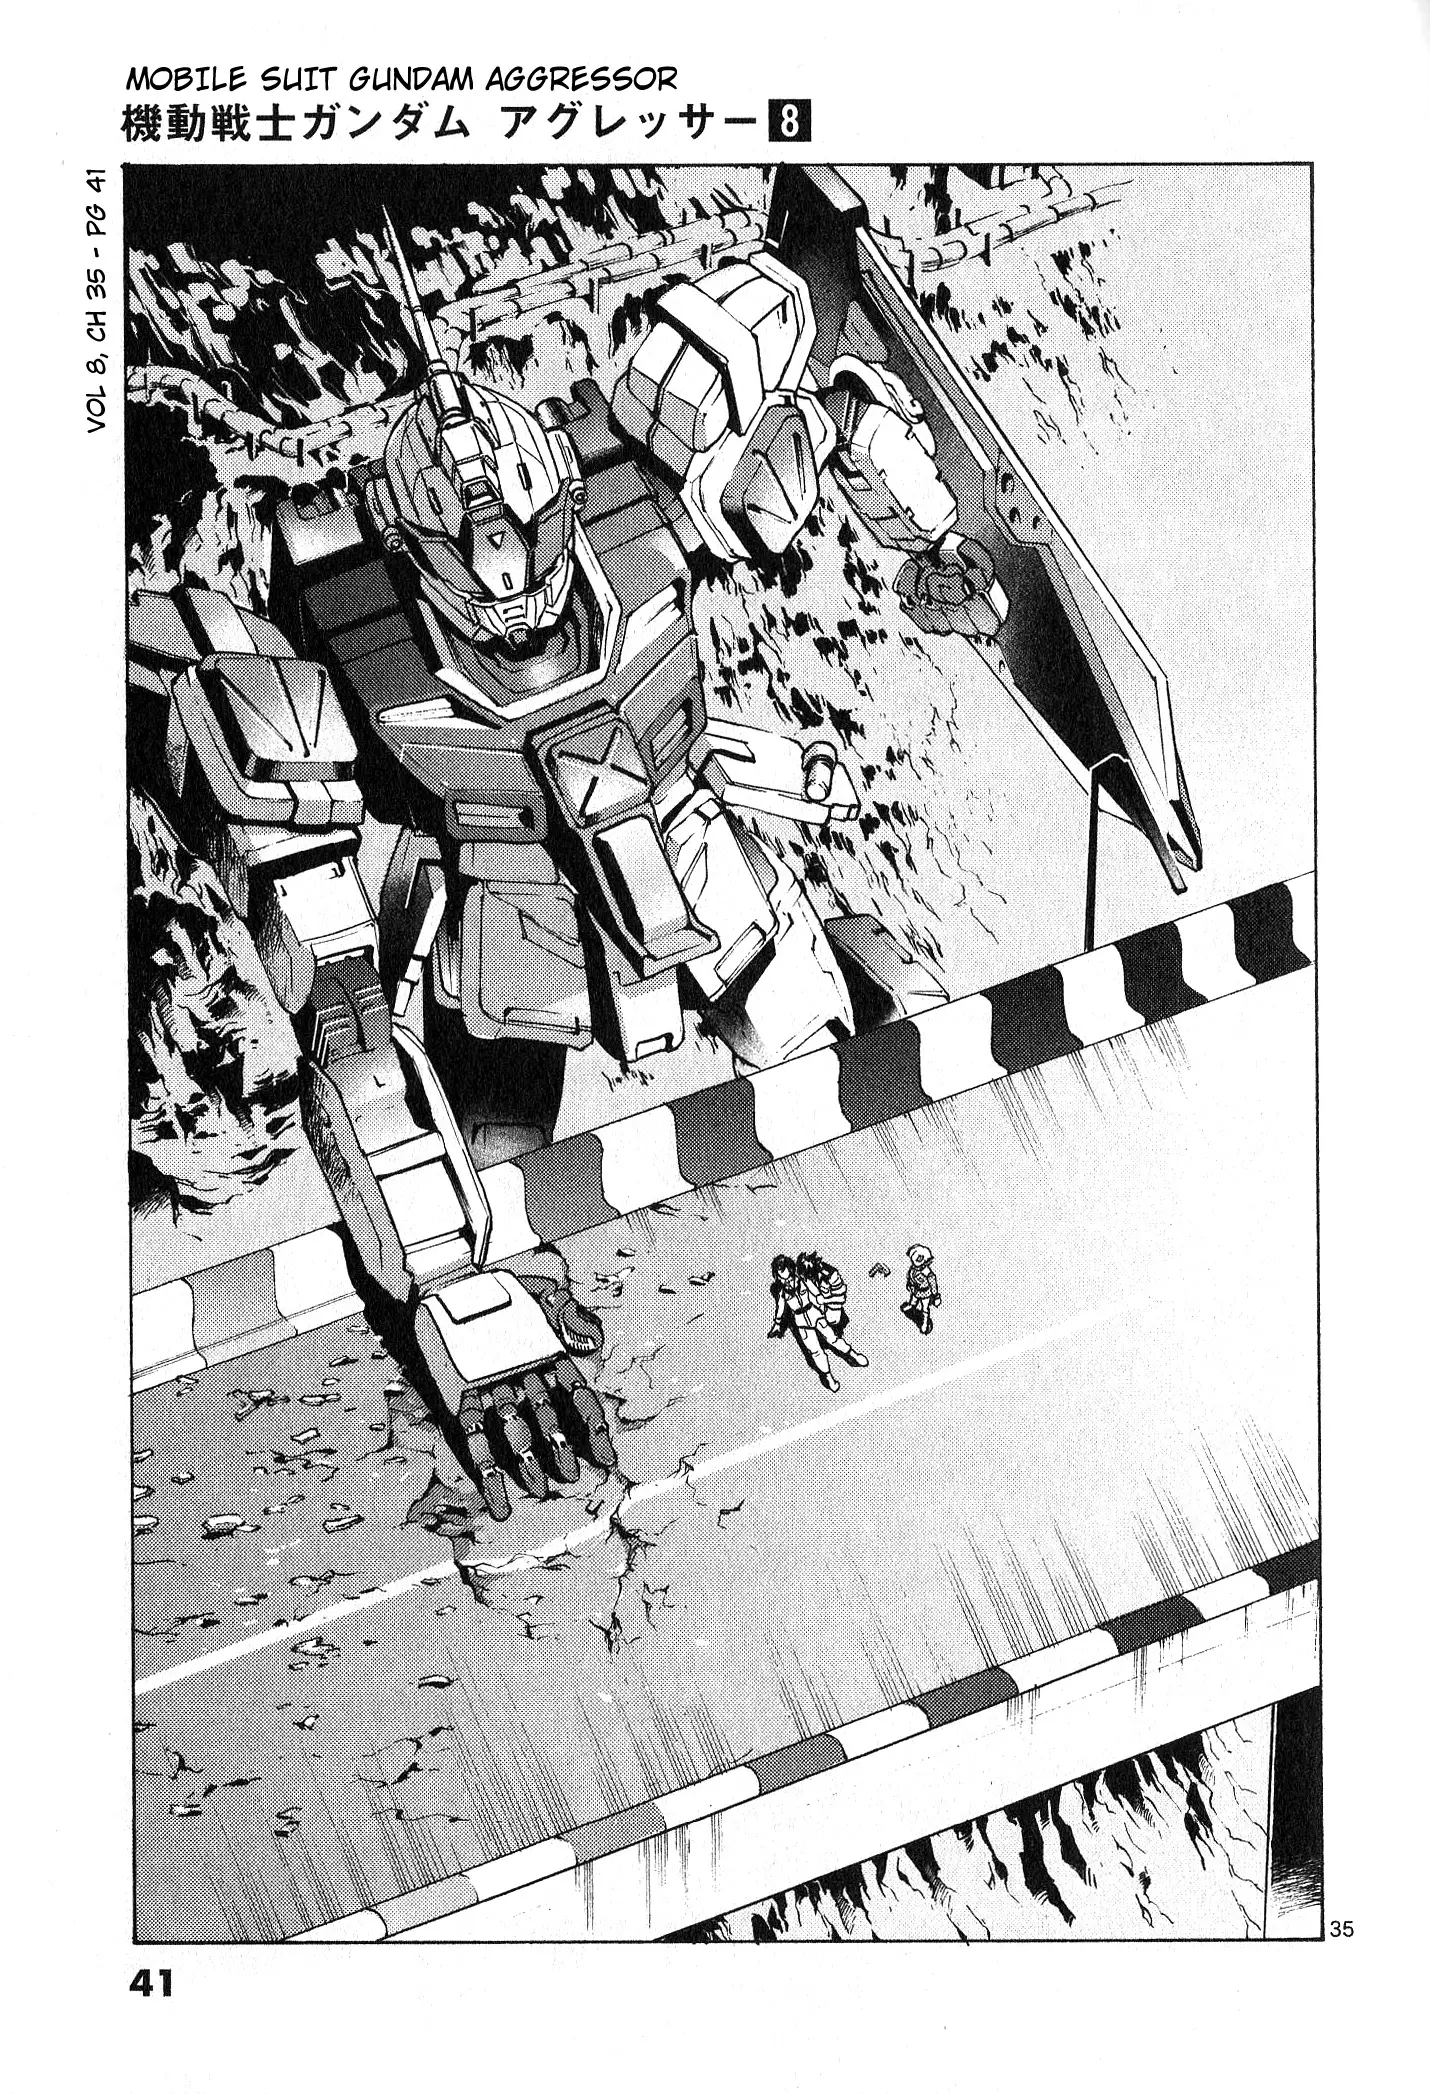 Mobile Suit Gundam Aggressor - 35 page 34-0858100f